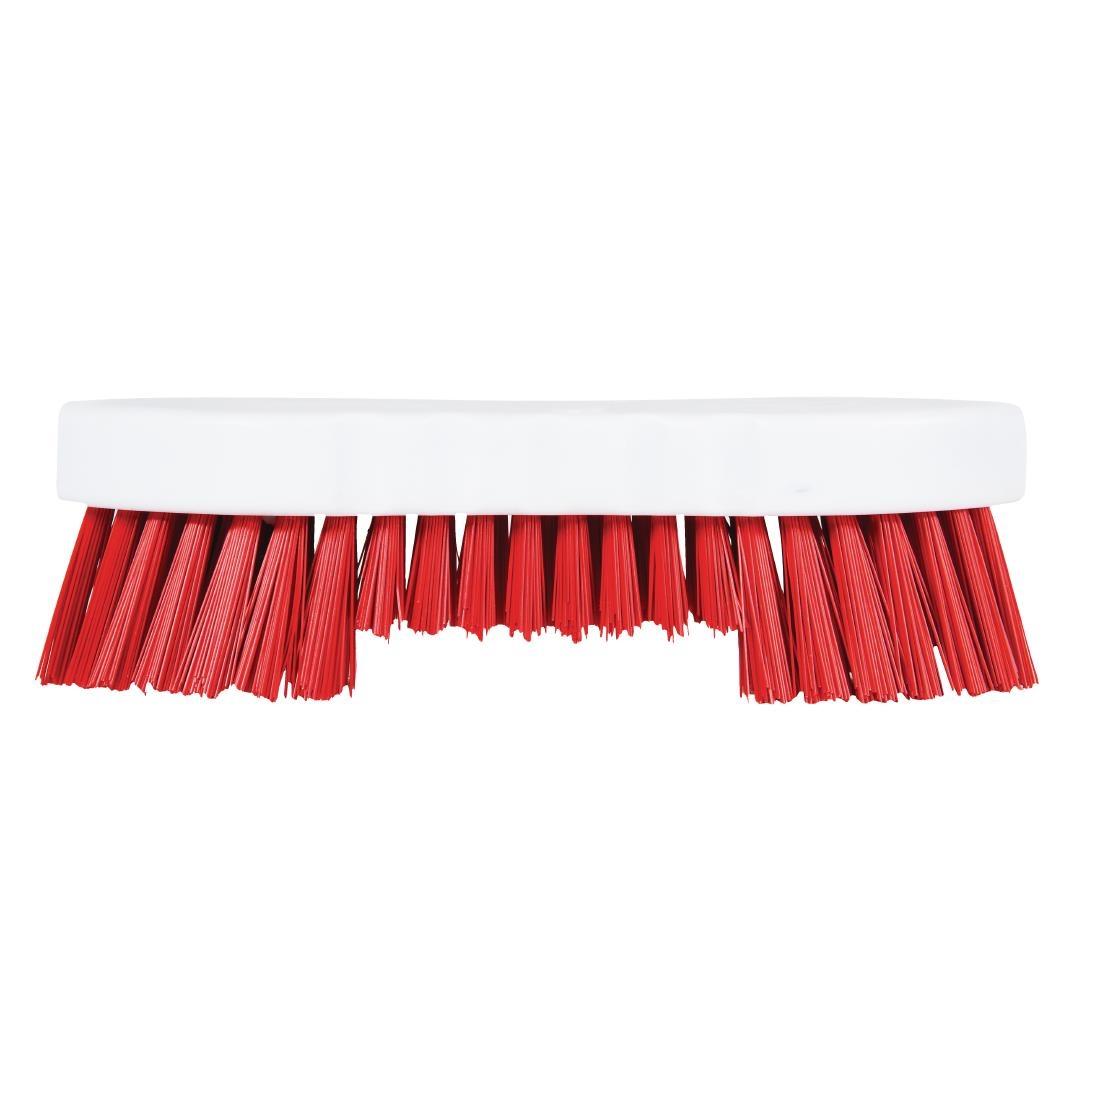 Jantex Scrub Brush Red - L721  - 2